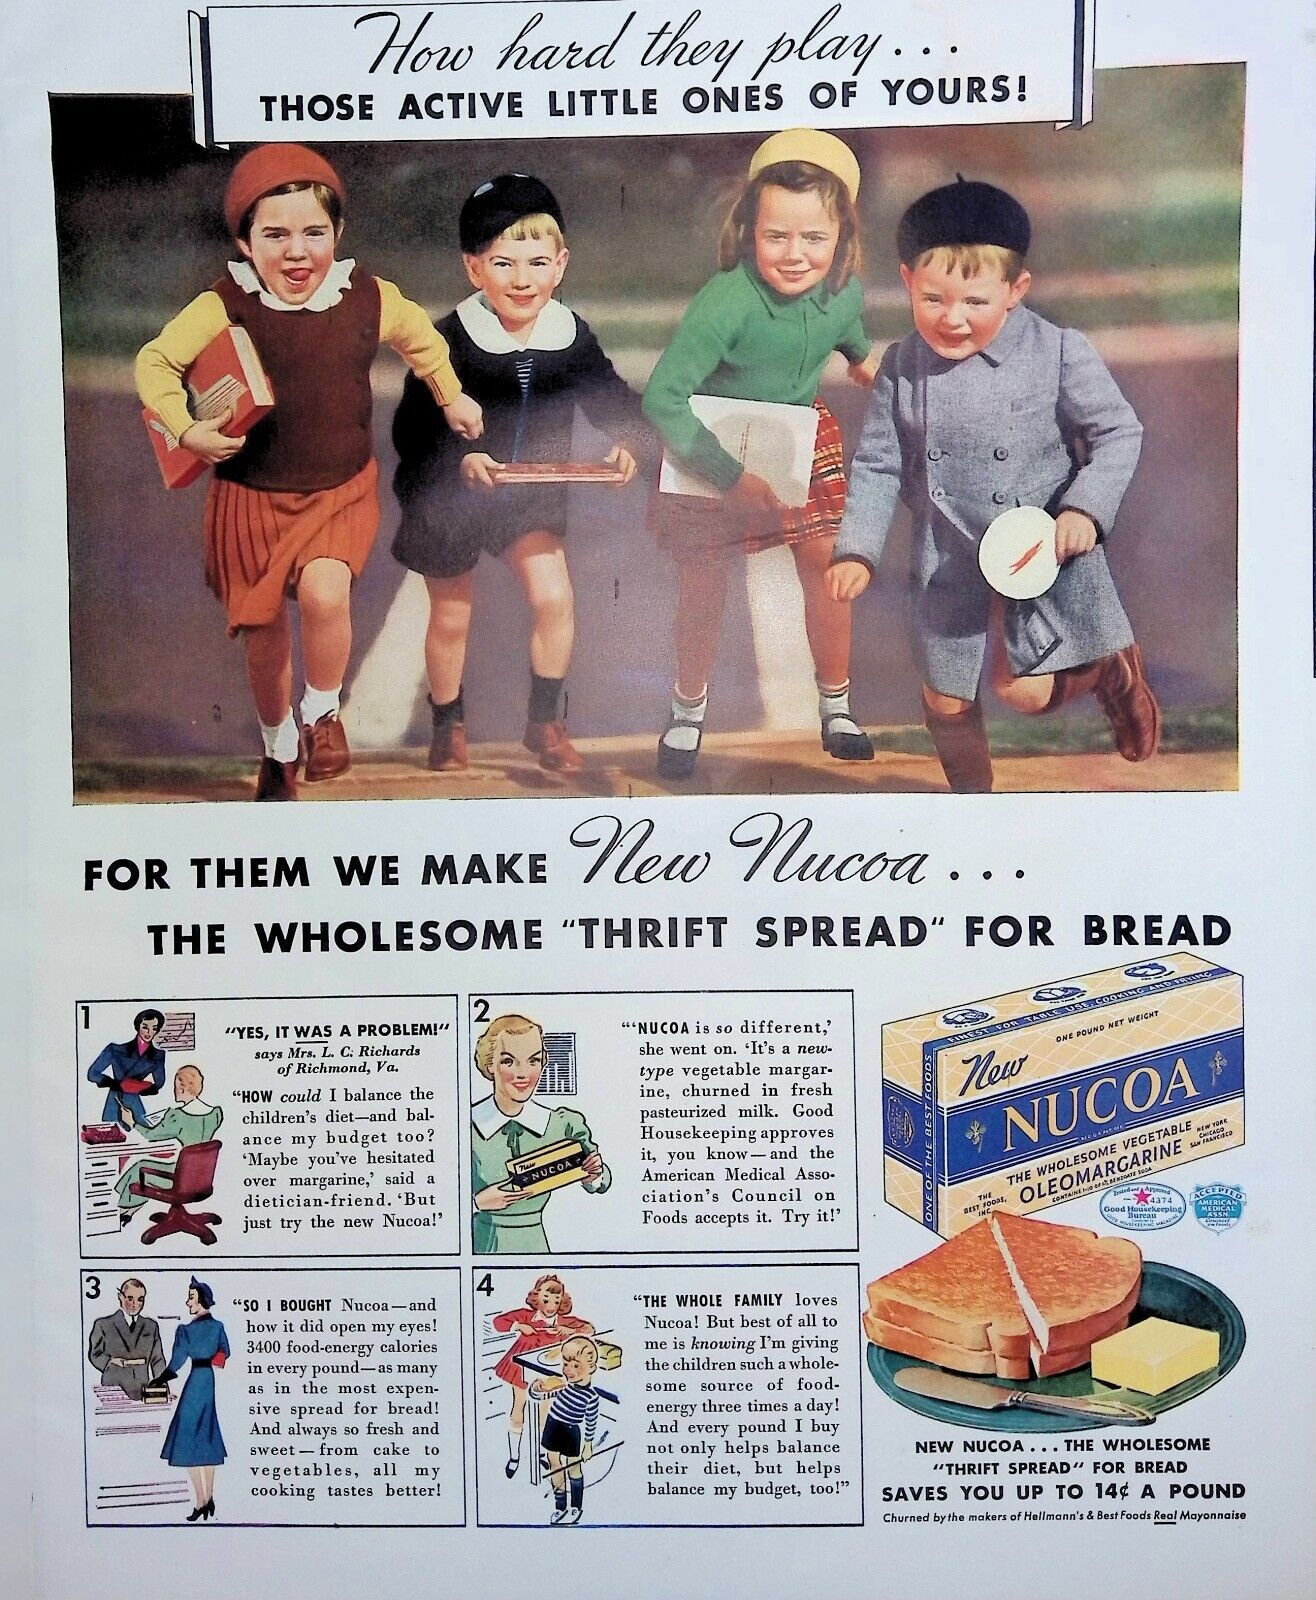 Nucoa Oleo Margarine Print Ad from 1939